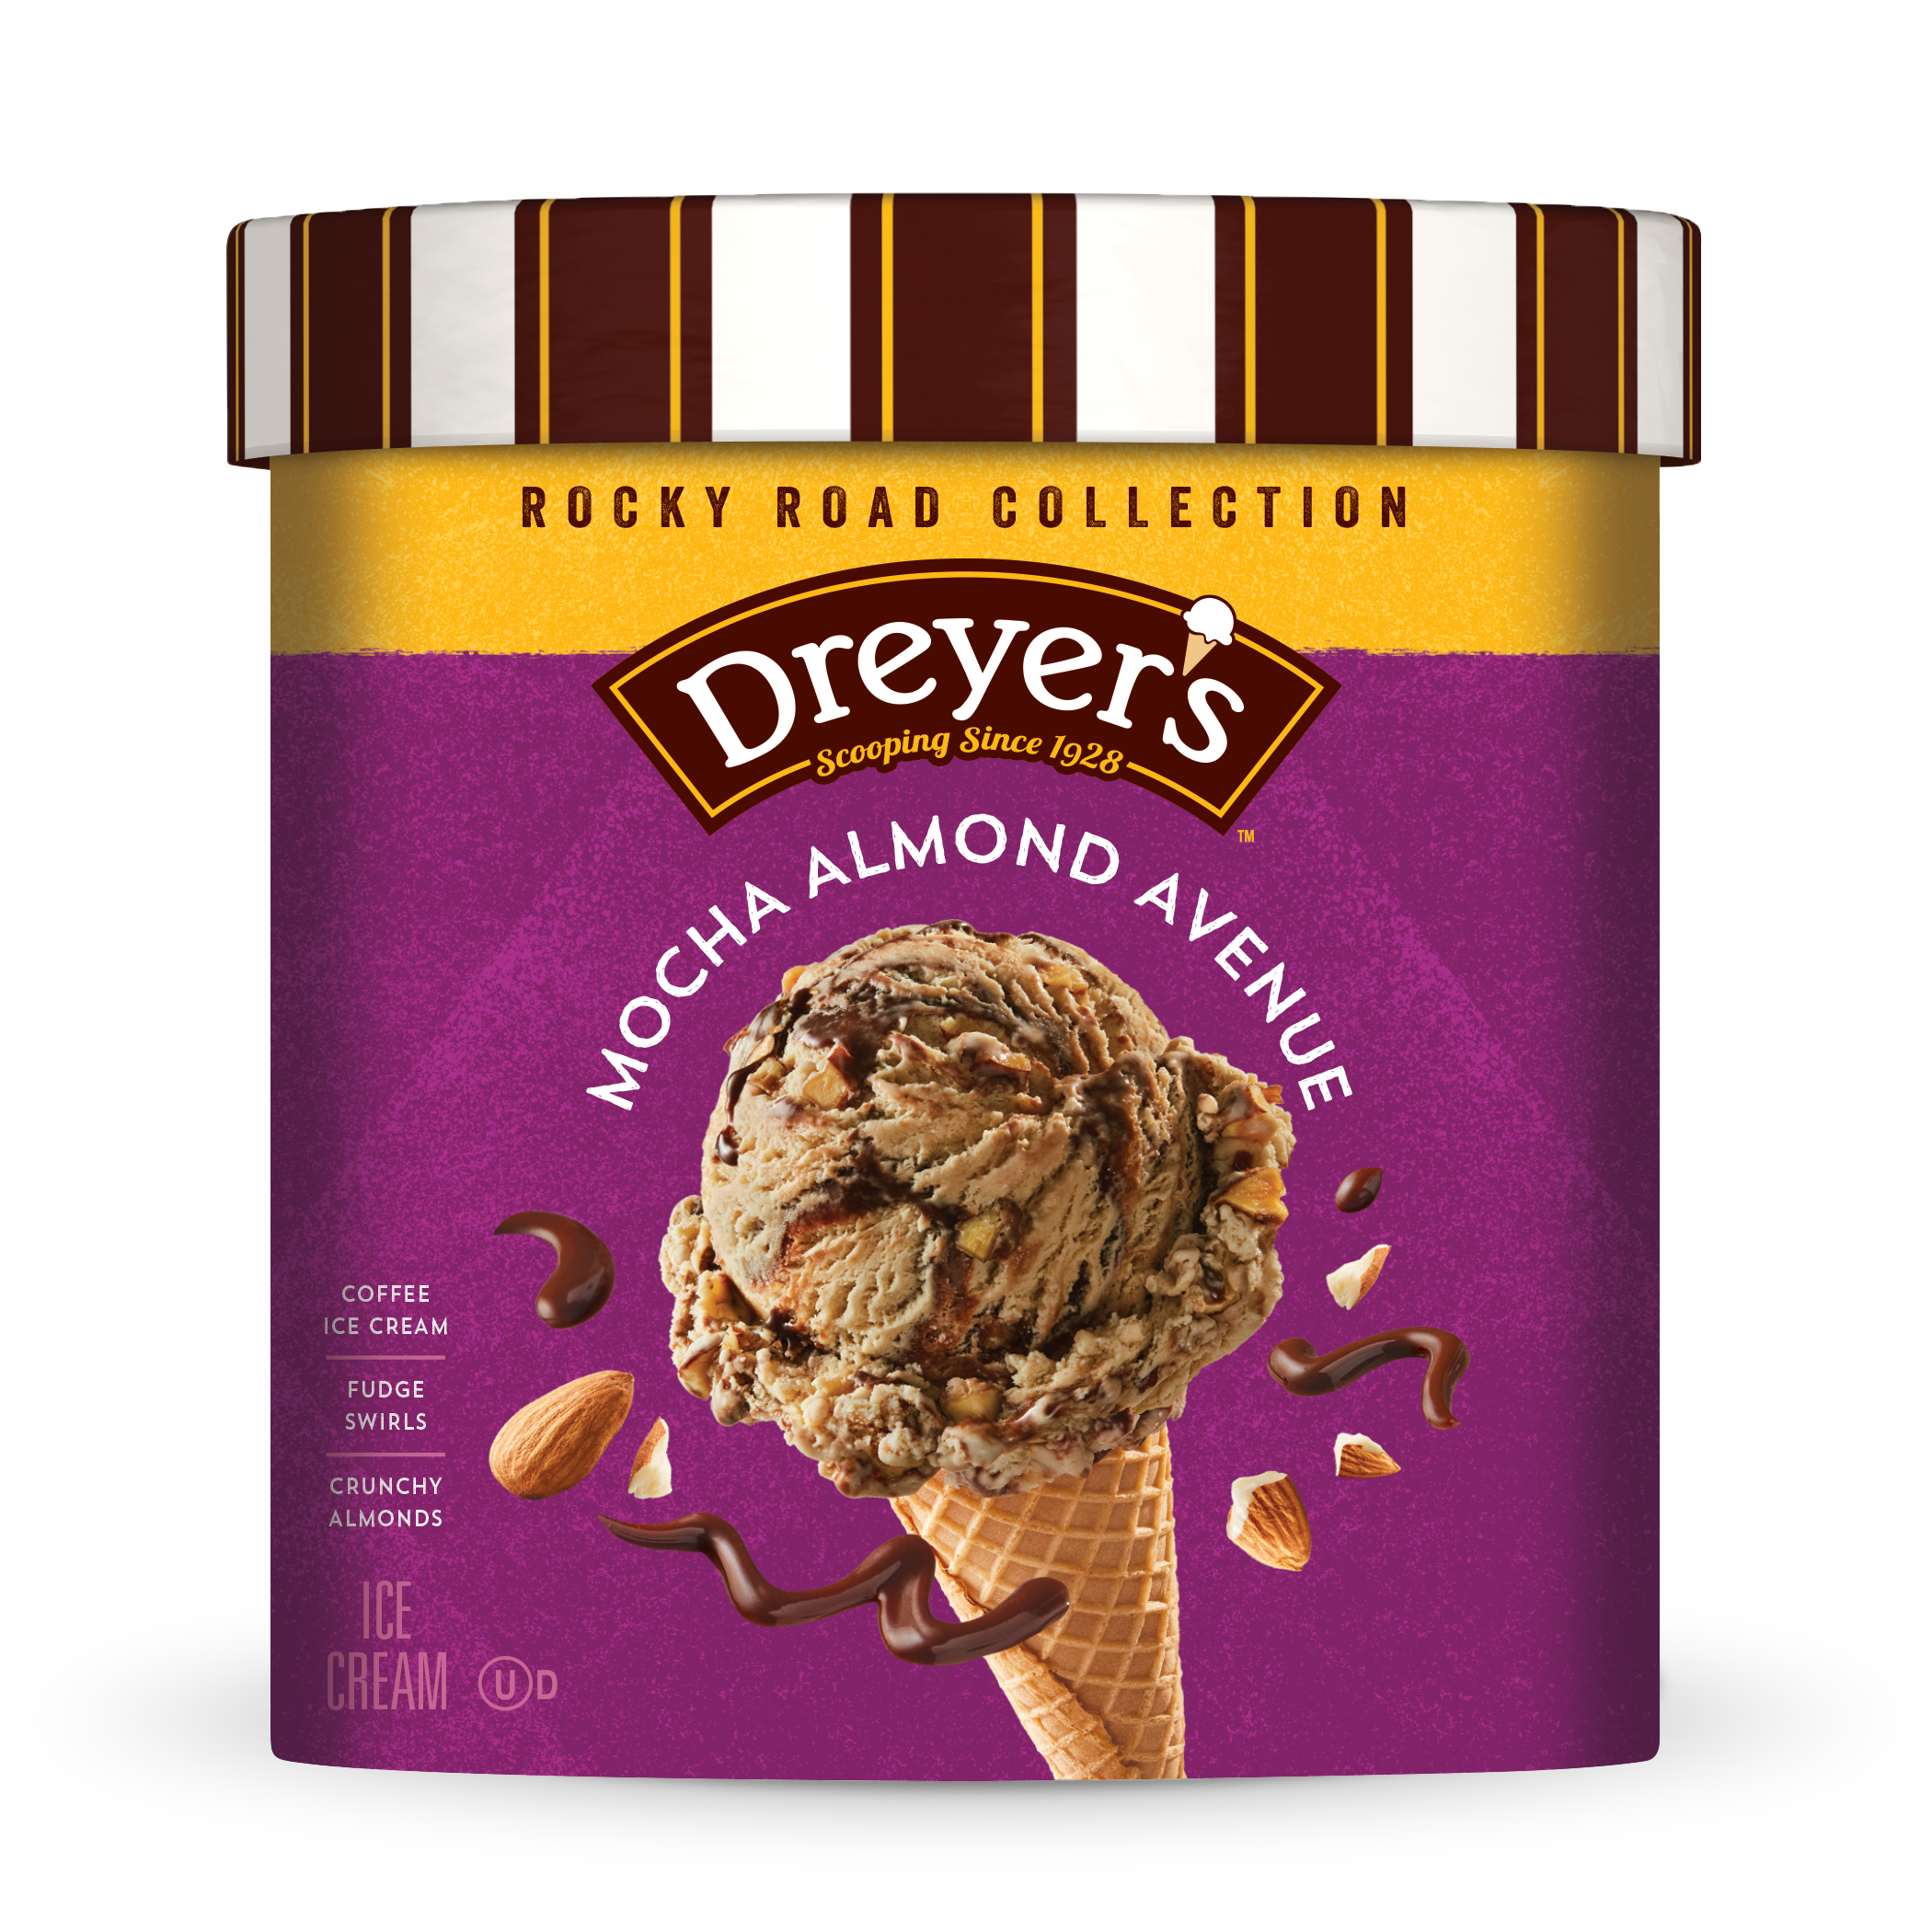 Carton of Dreyer's mocha almond ice cream